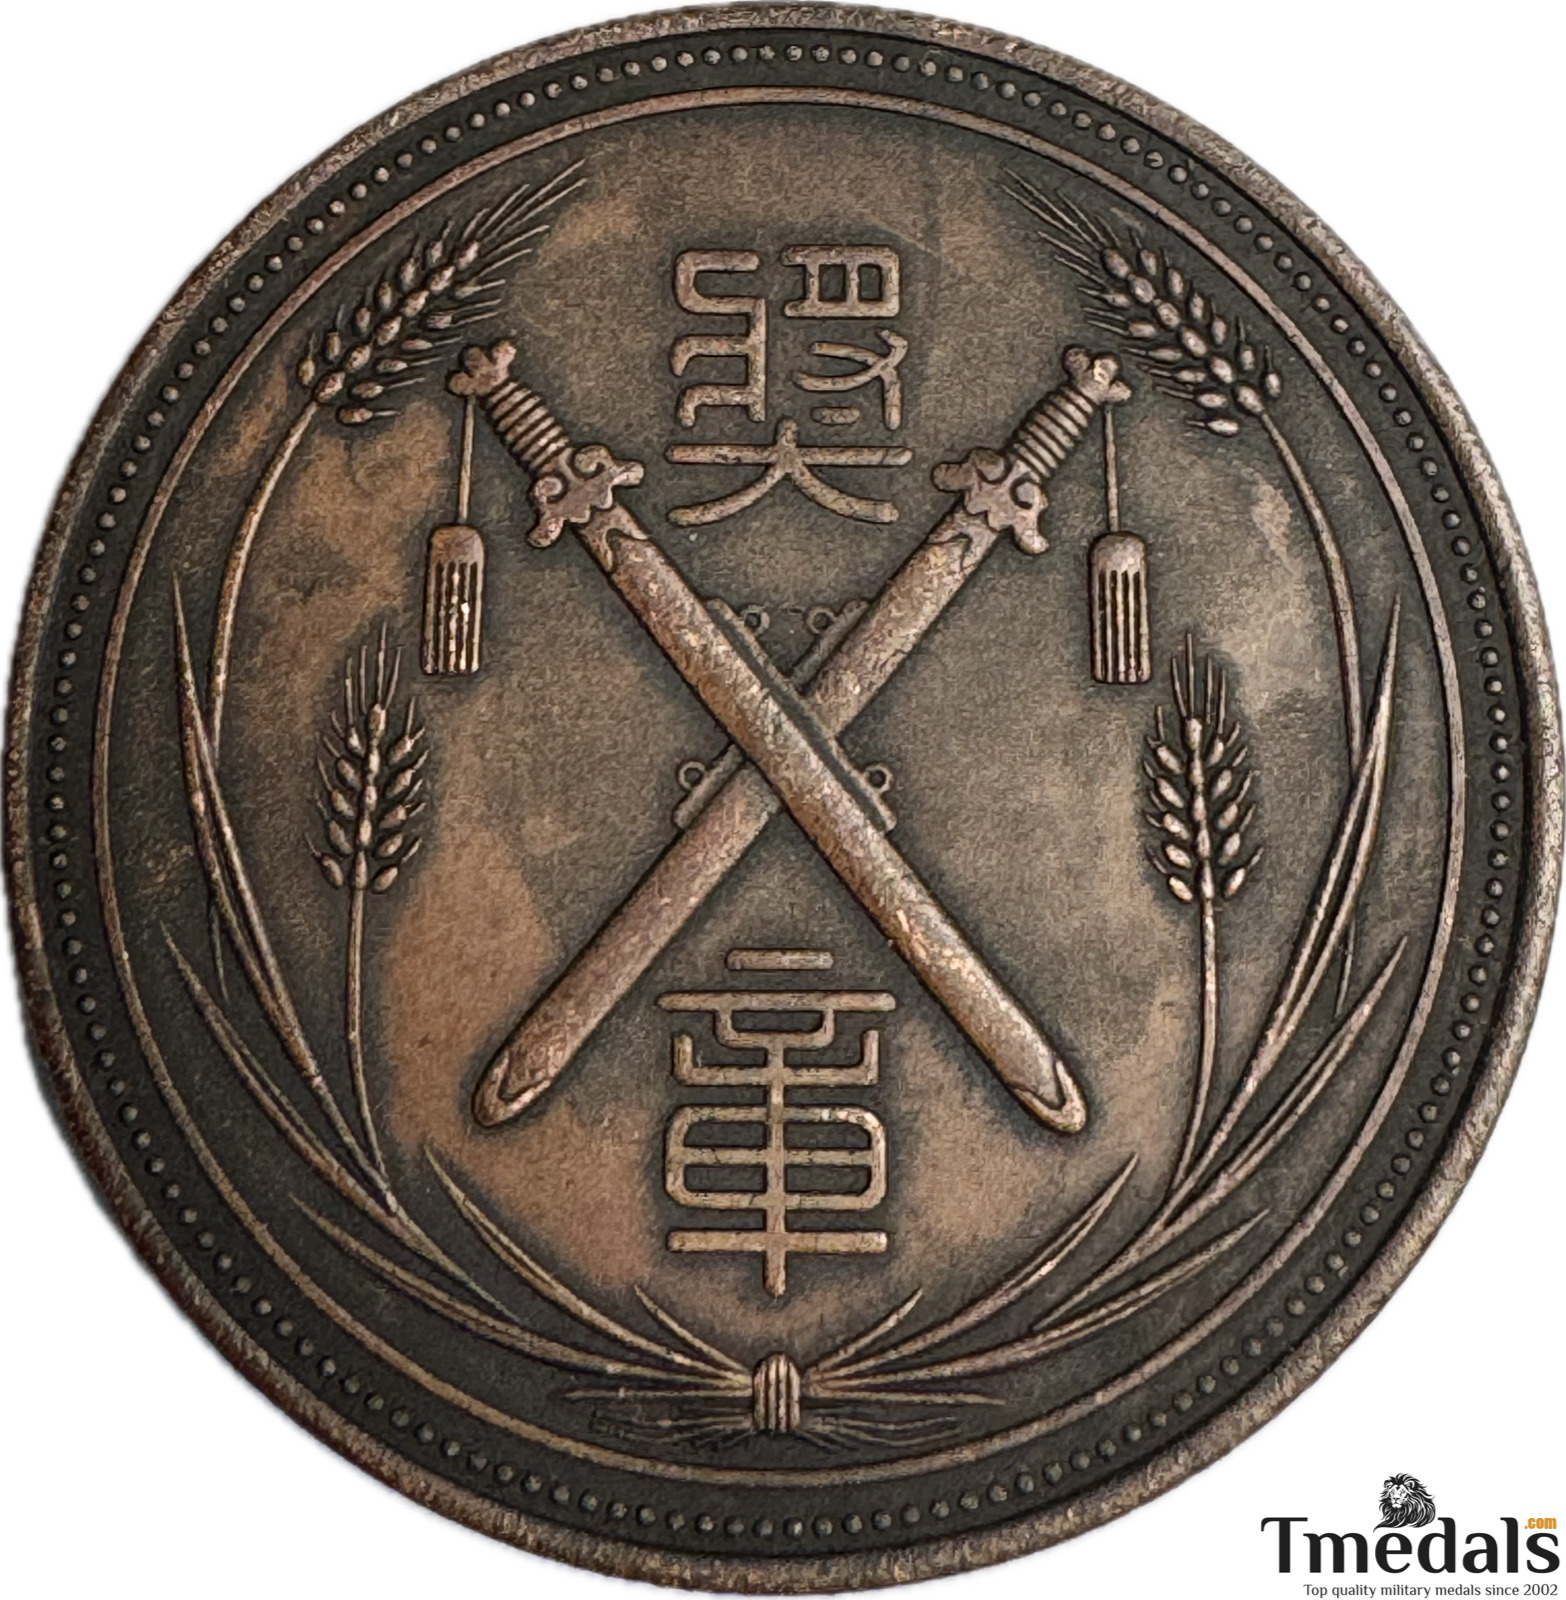 Republic of China Medal Order President Yuan Shikai brass 1914 replica nice